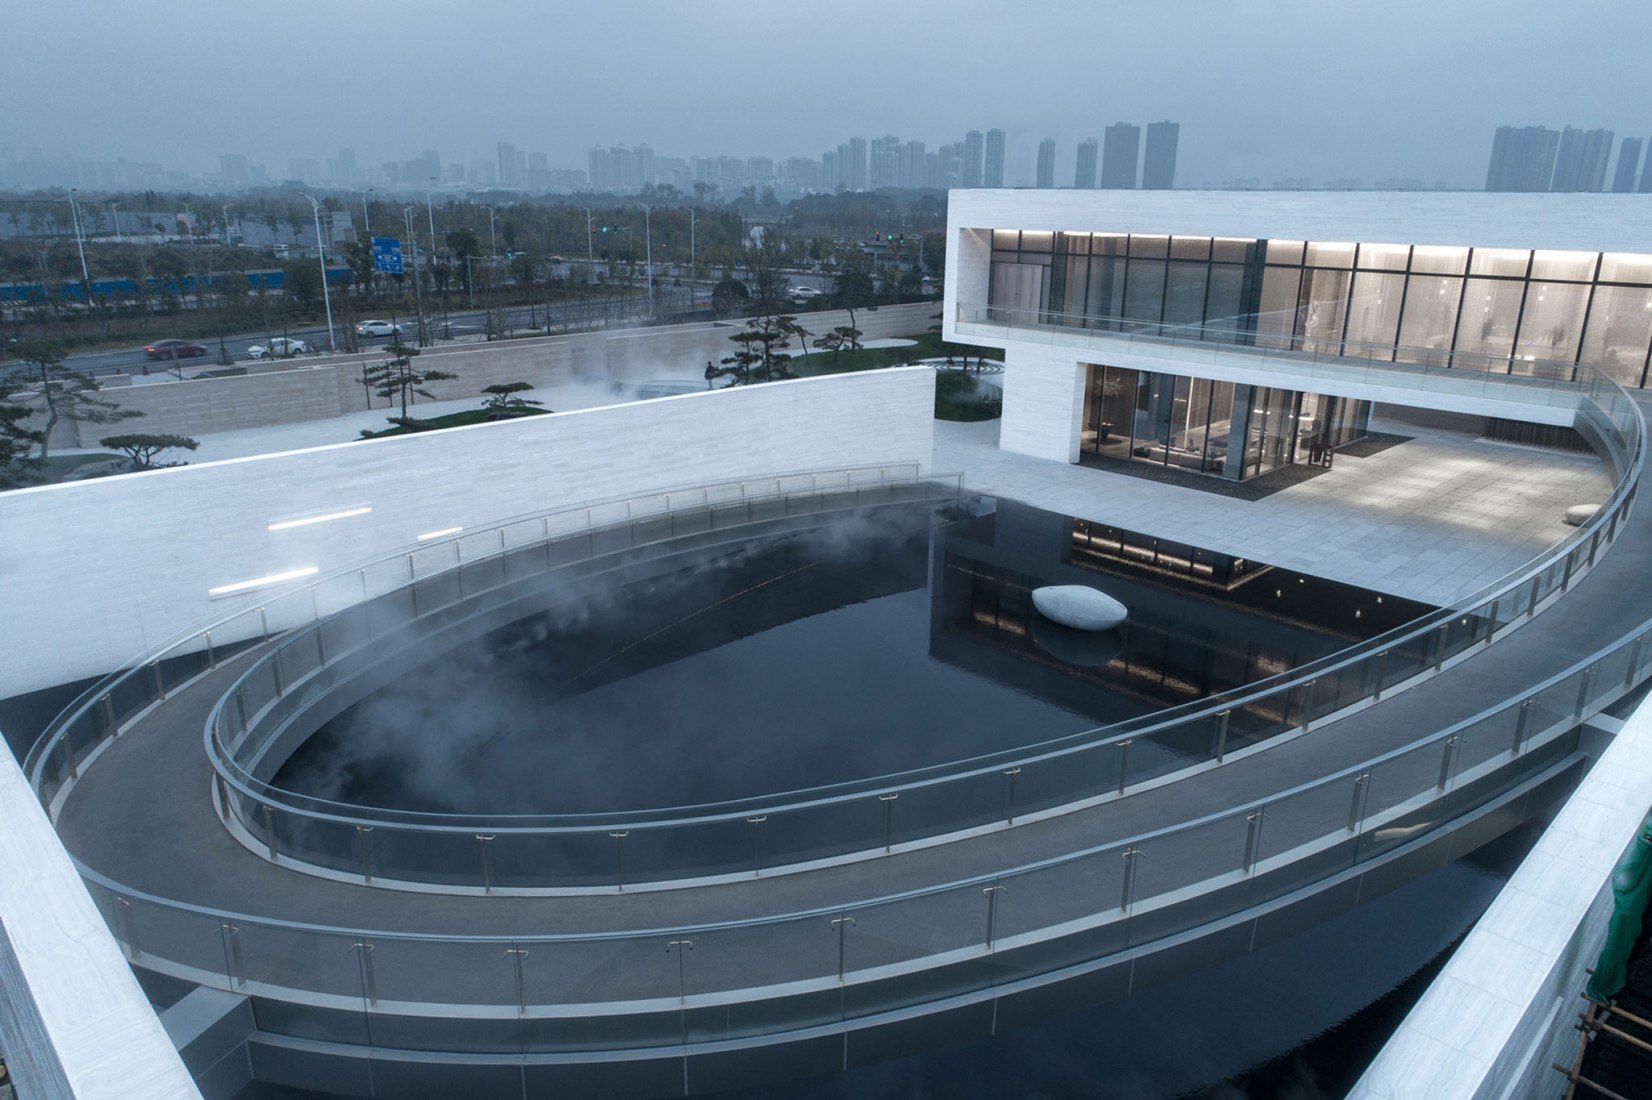 Waterfront Art Gallery por Lacime Architects. Fotografía por XingzhiArchitecture.